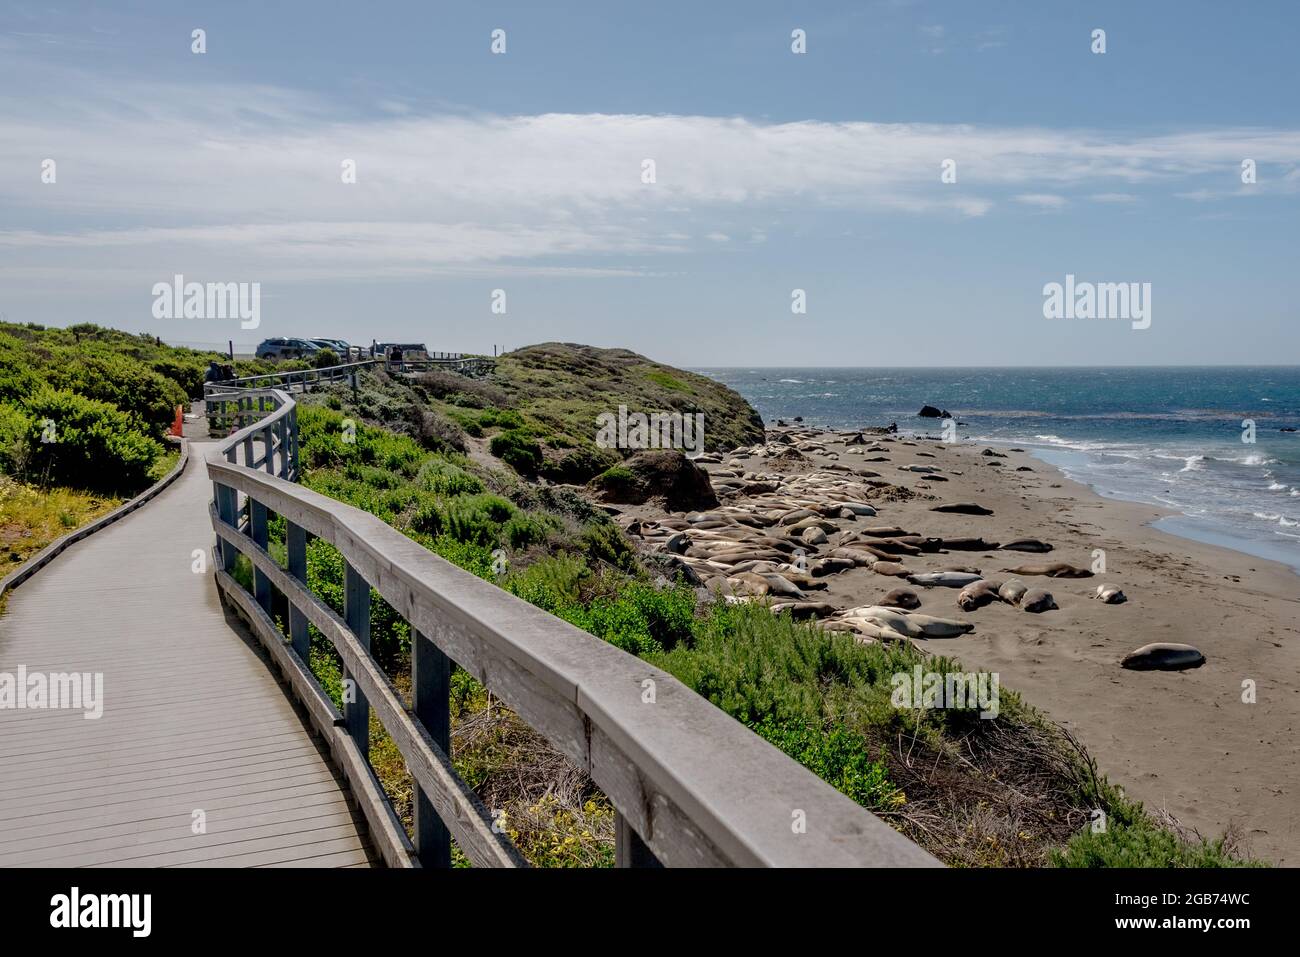 The elephant seal vista trail with boardwalk with view overlooking the elephant seals of the PIedras Blancas colony on California's Central Coast. Stock Photo